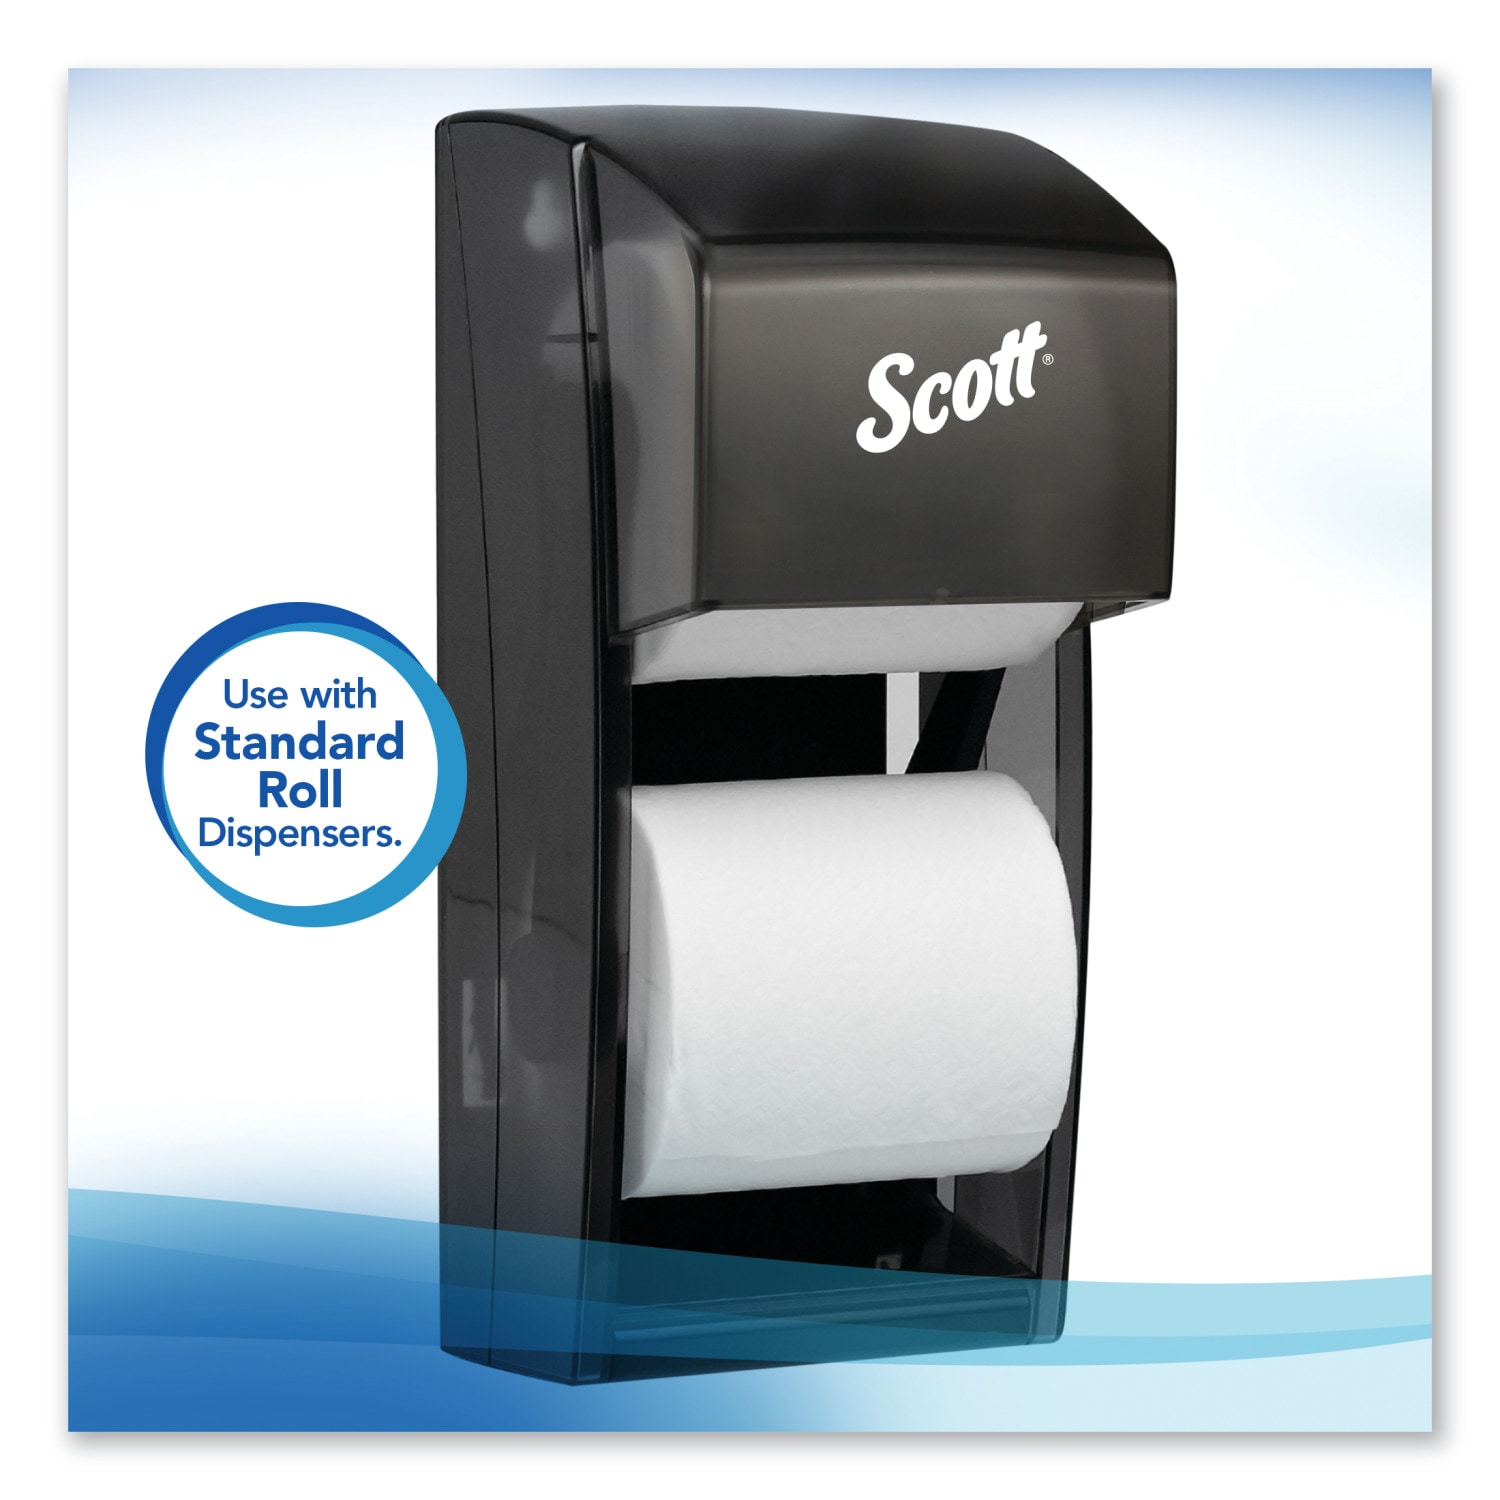 SCOTT® ESSENTIAL® 2-ply Toilet Paper Roll (38003), White, 12 Packs / Case,  4 Rolls / Pack (48 Rolls)